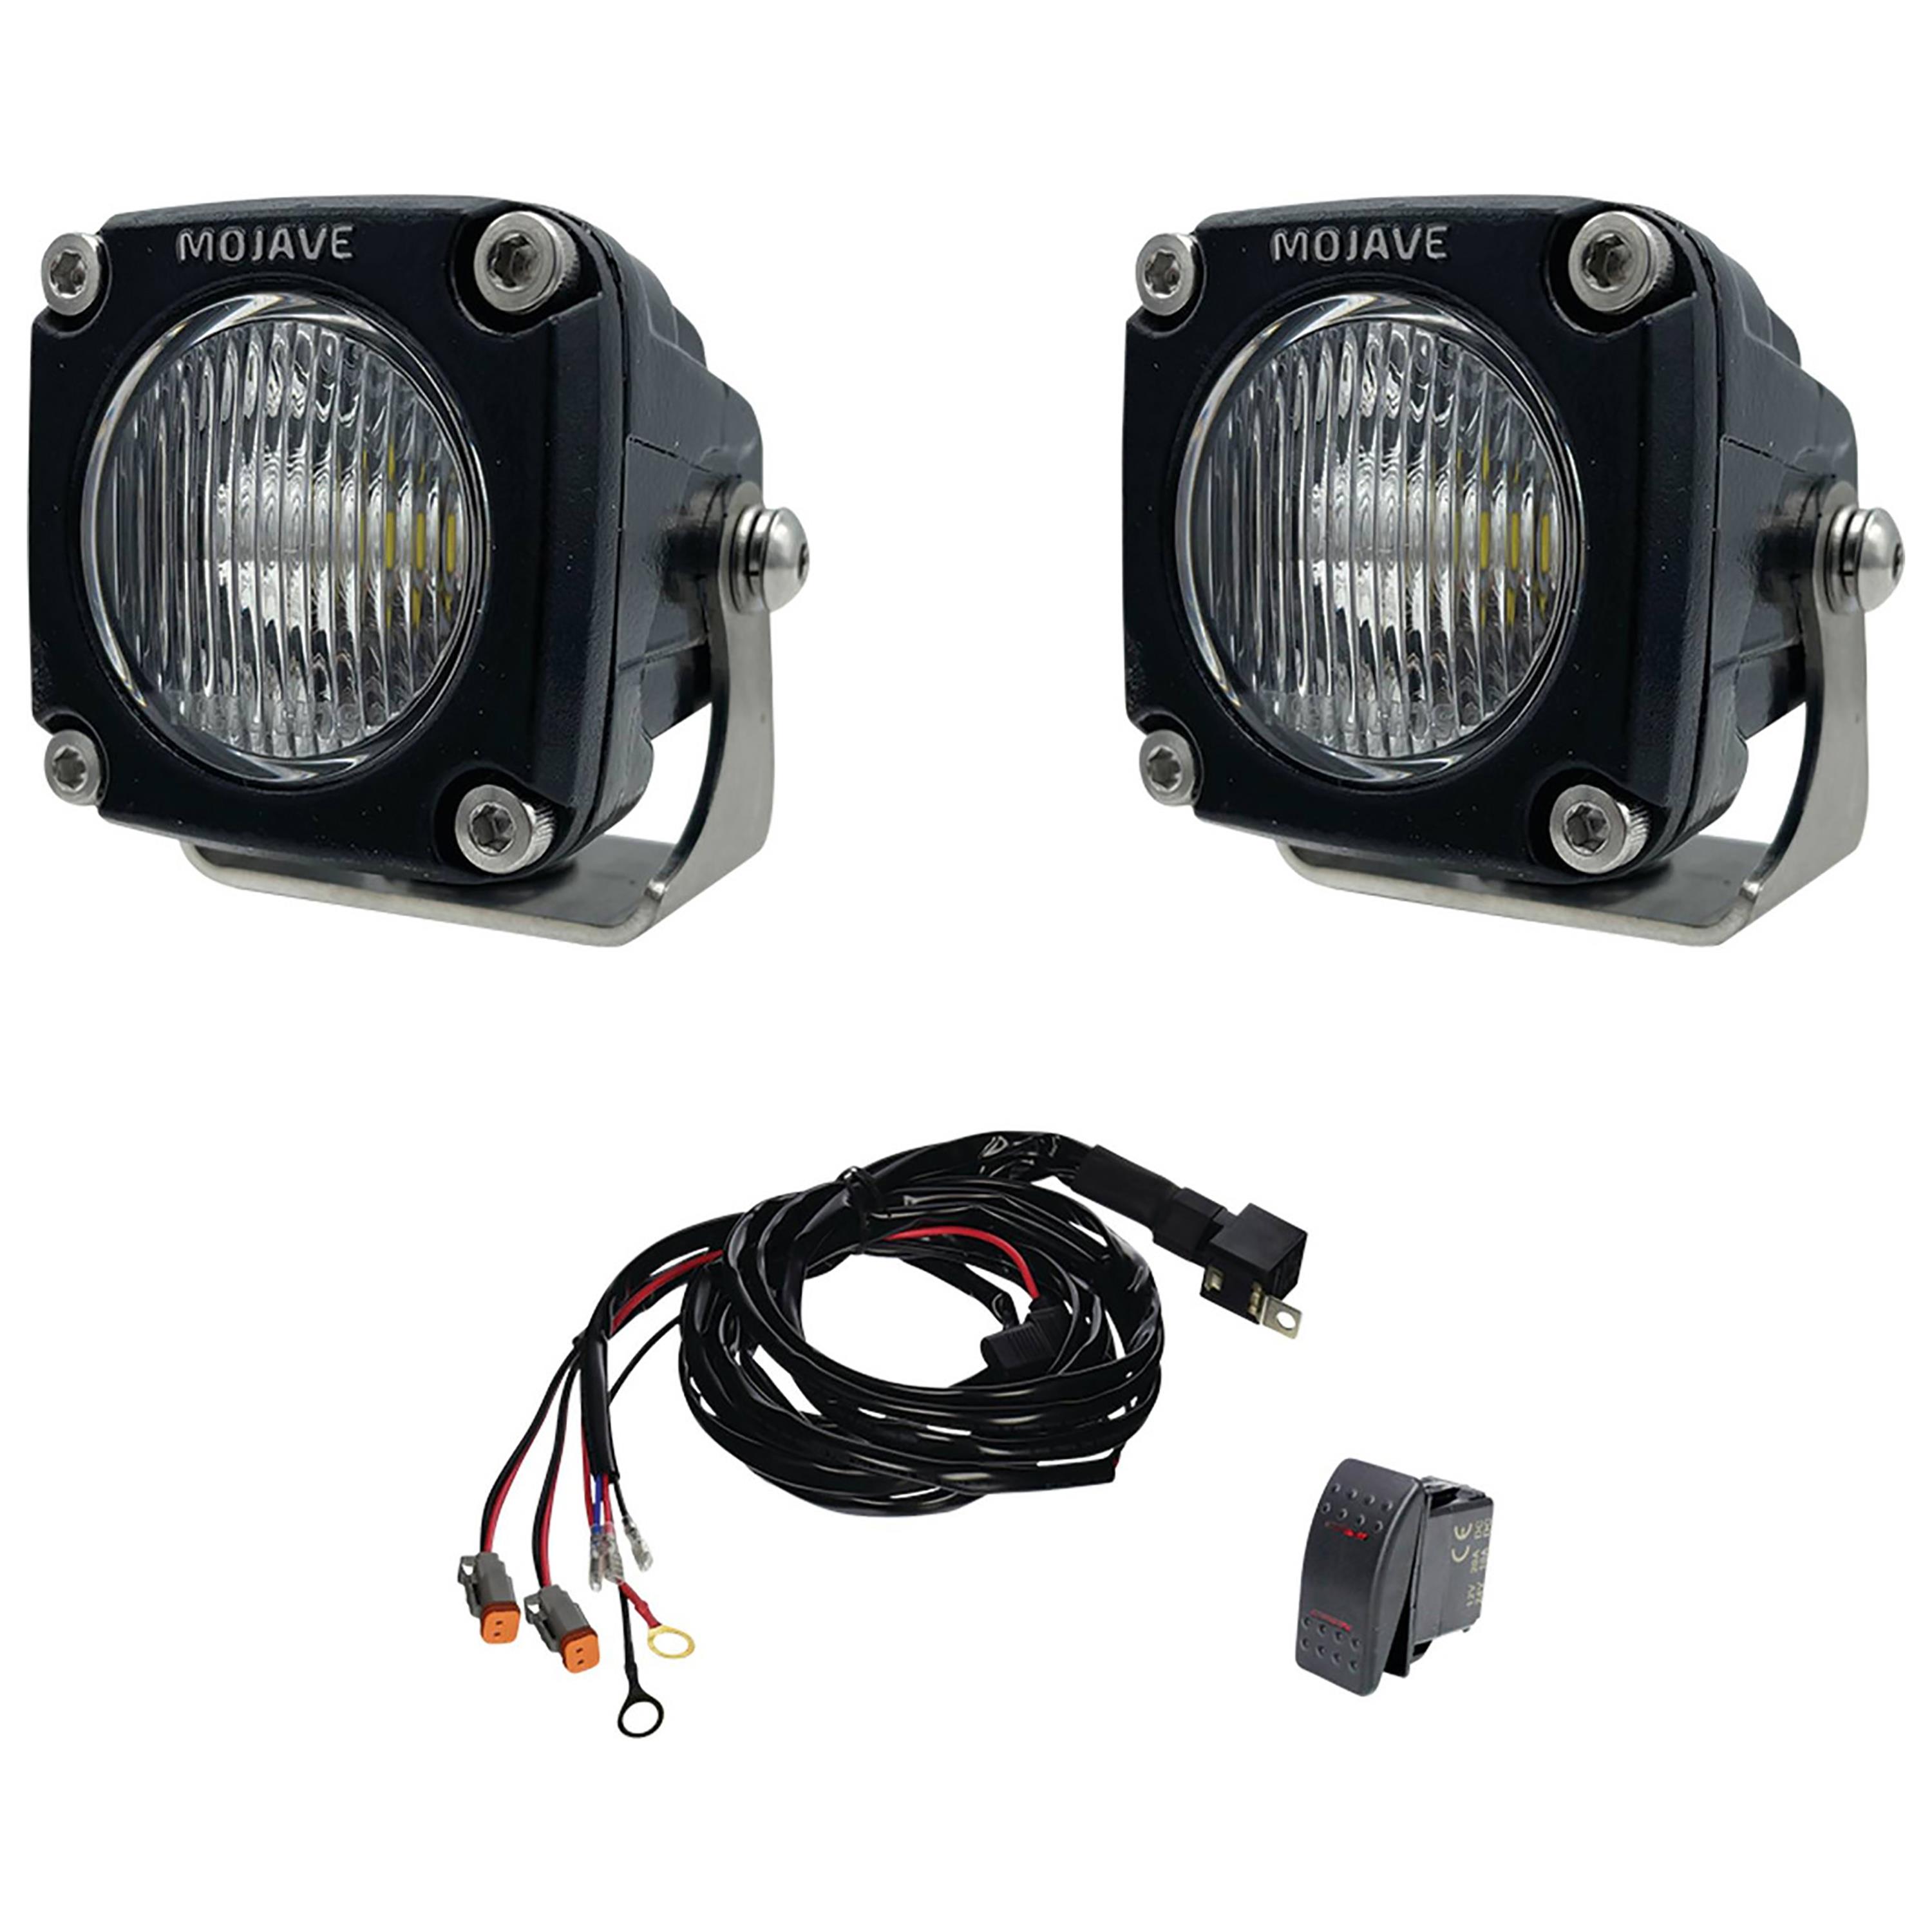 2 Inch Mojave Series LED Racing Light Kit, 2 pk w/ Wiring Harness